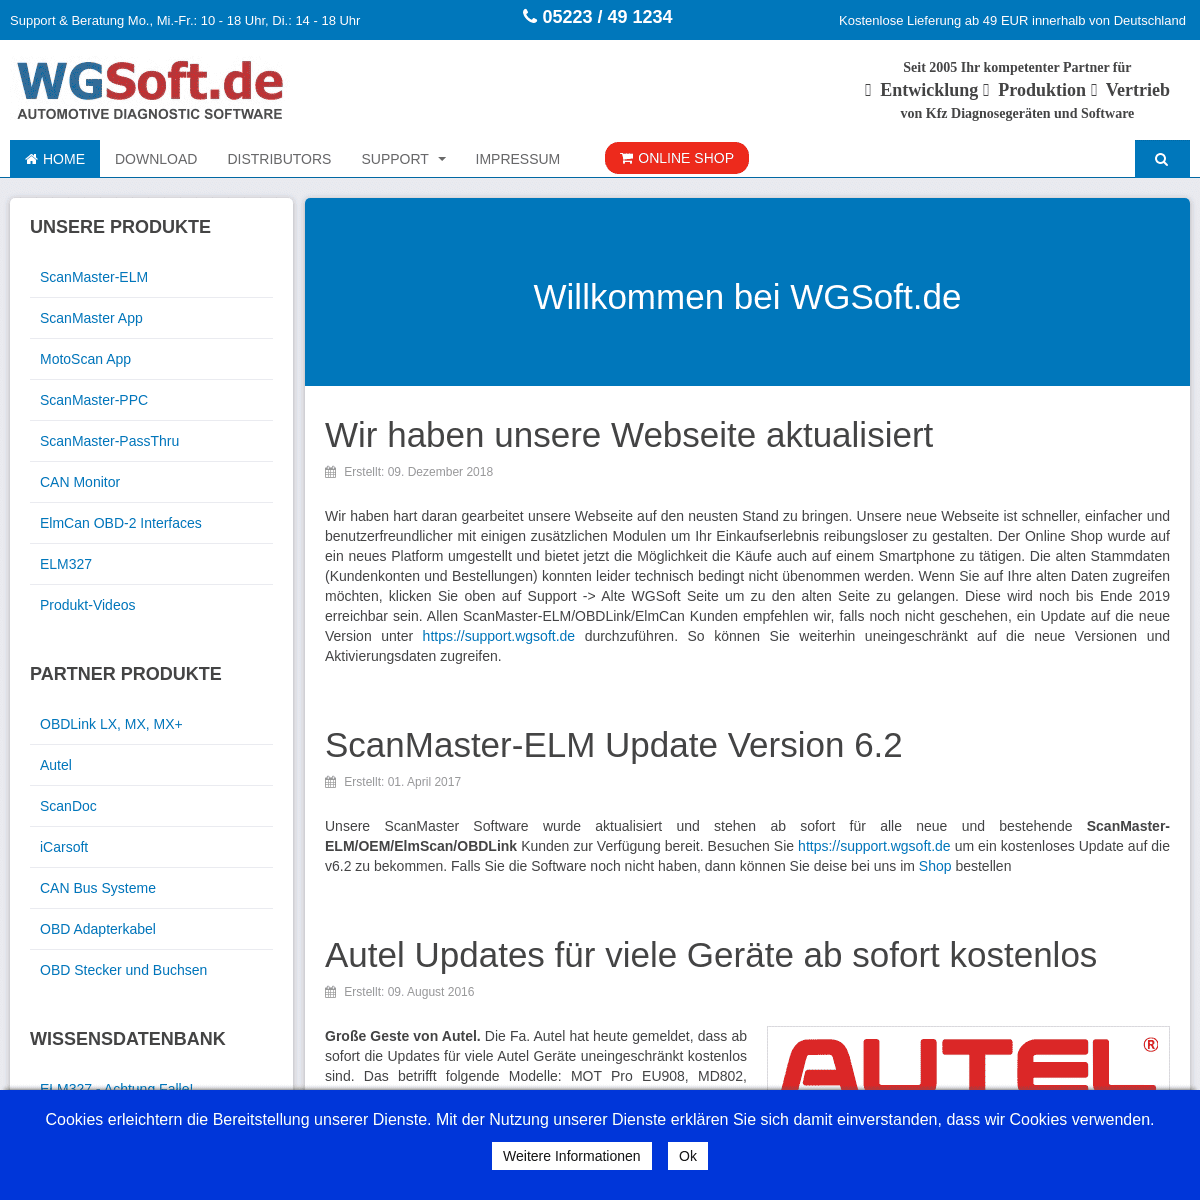 A complete backup of wgsoft.de